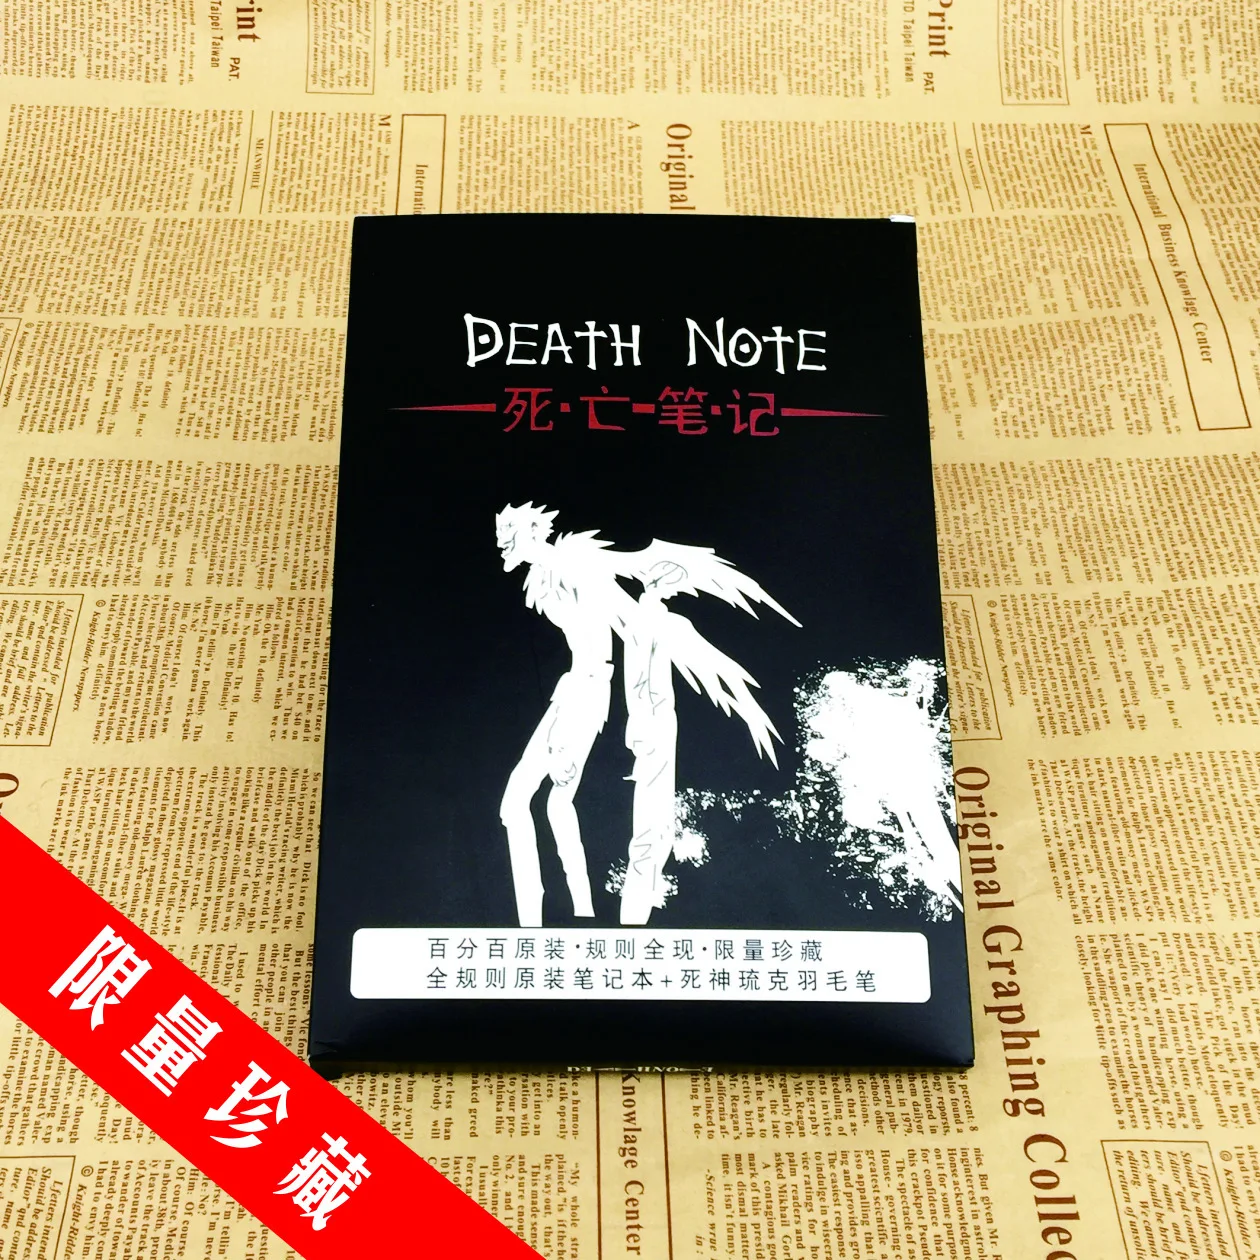 Novo filme de Death Note - Made in Japan